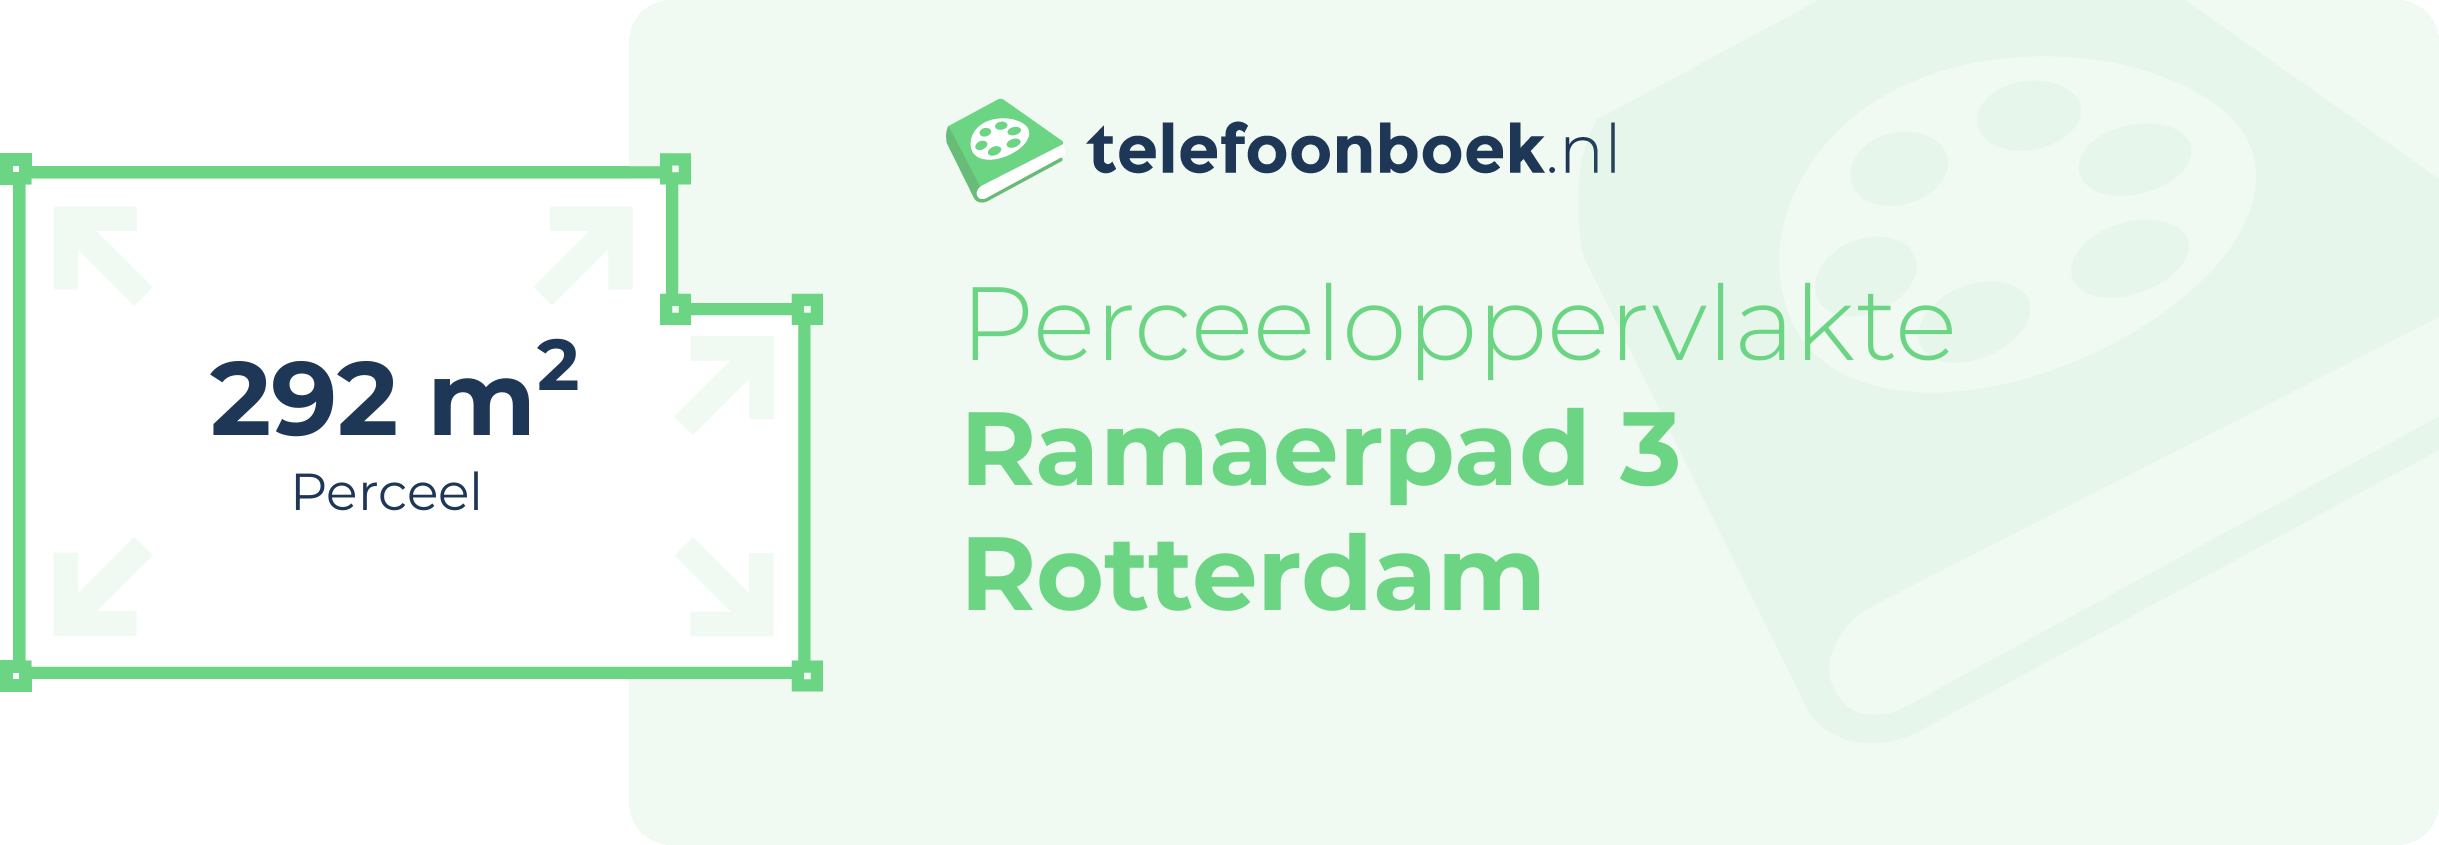 Perceeloppervlakte Ramaerpad 3 Rotterdam